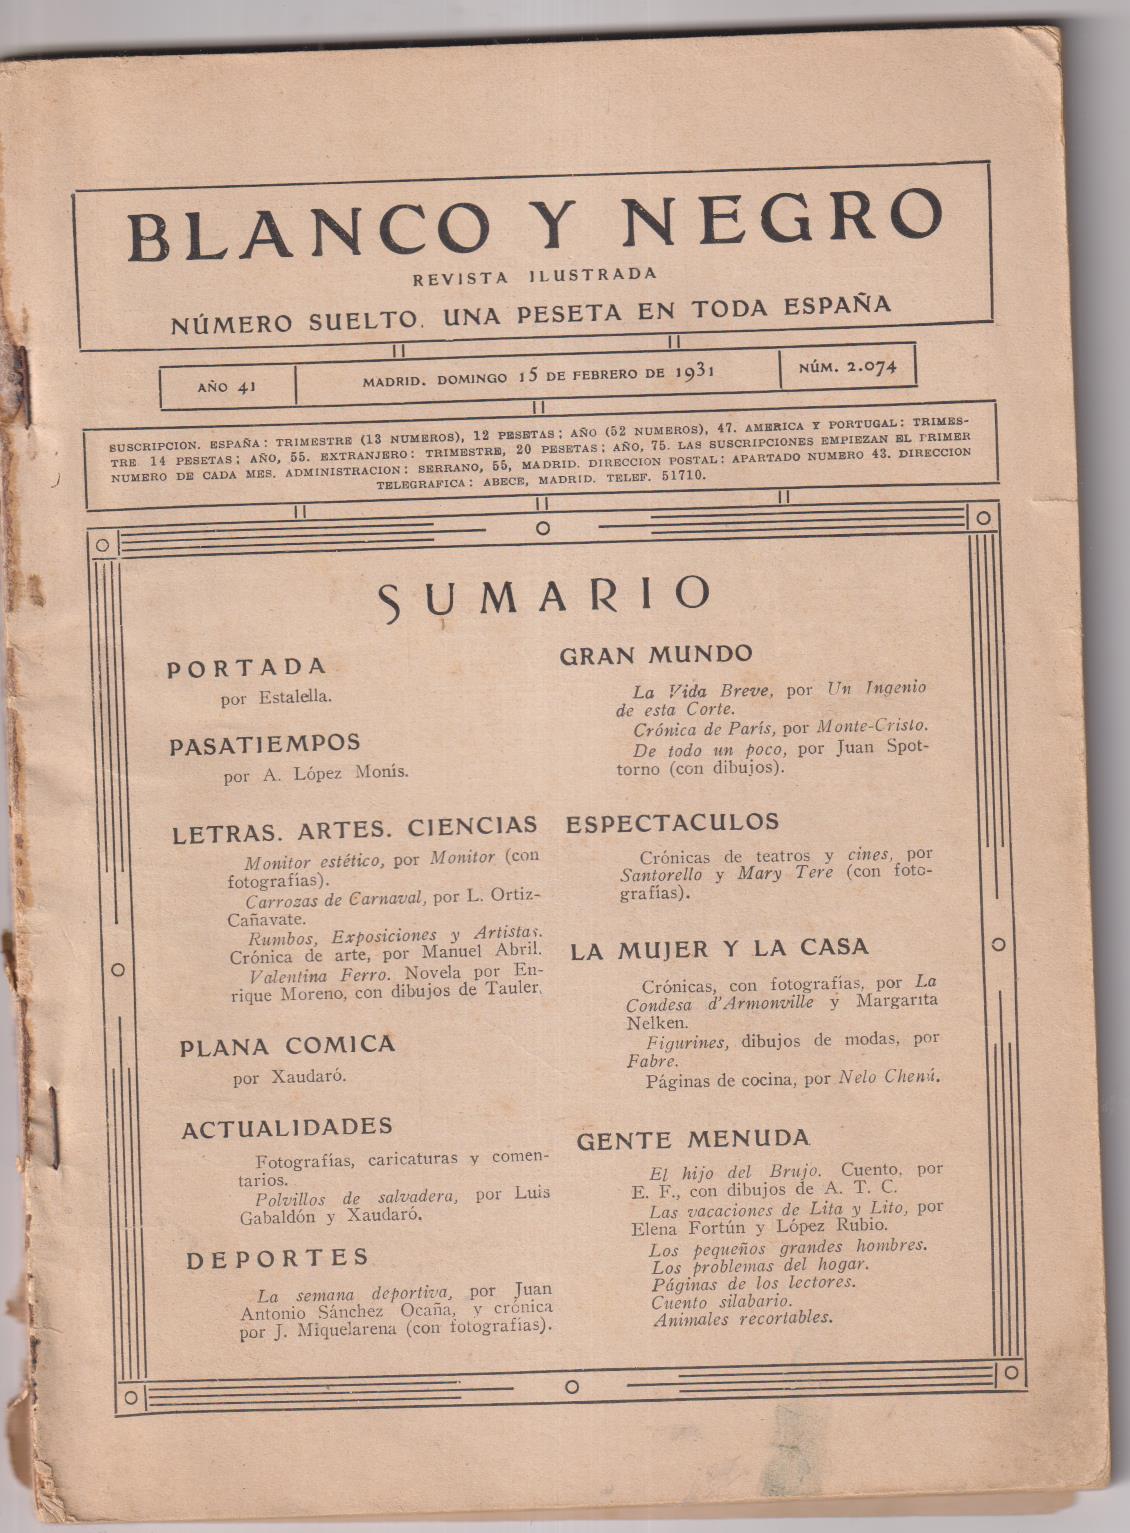 Blanco u negro nº 2074. Madrid 15 de Febrero de 1931